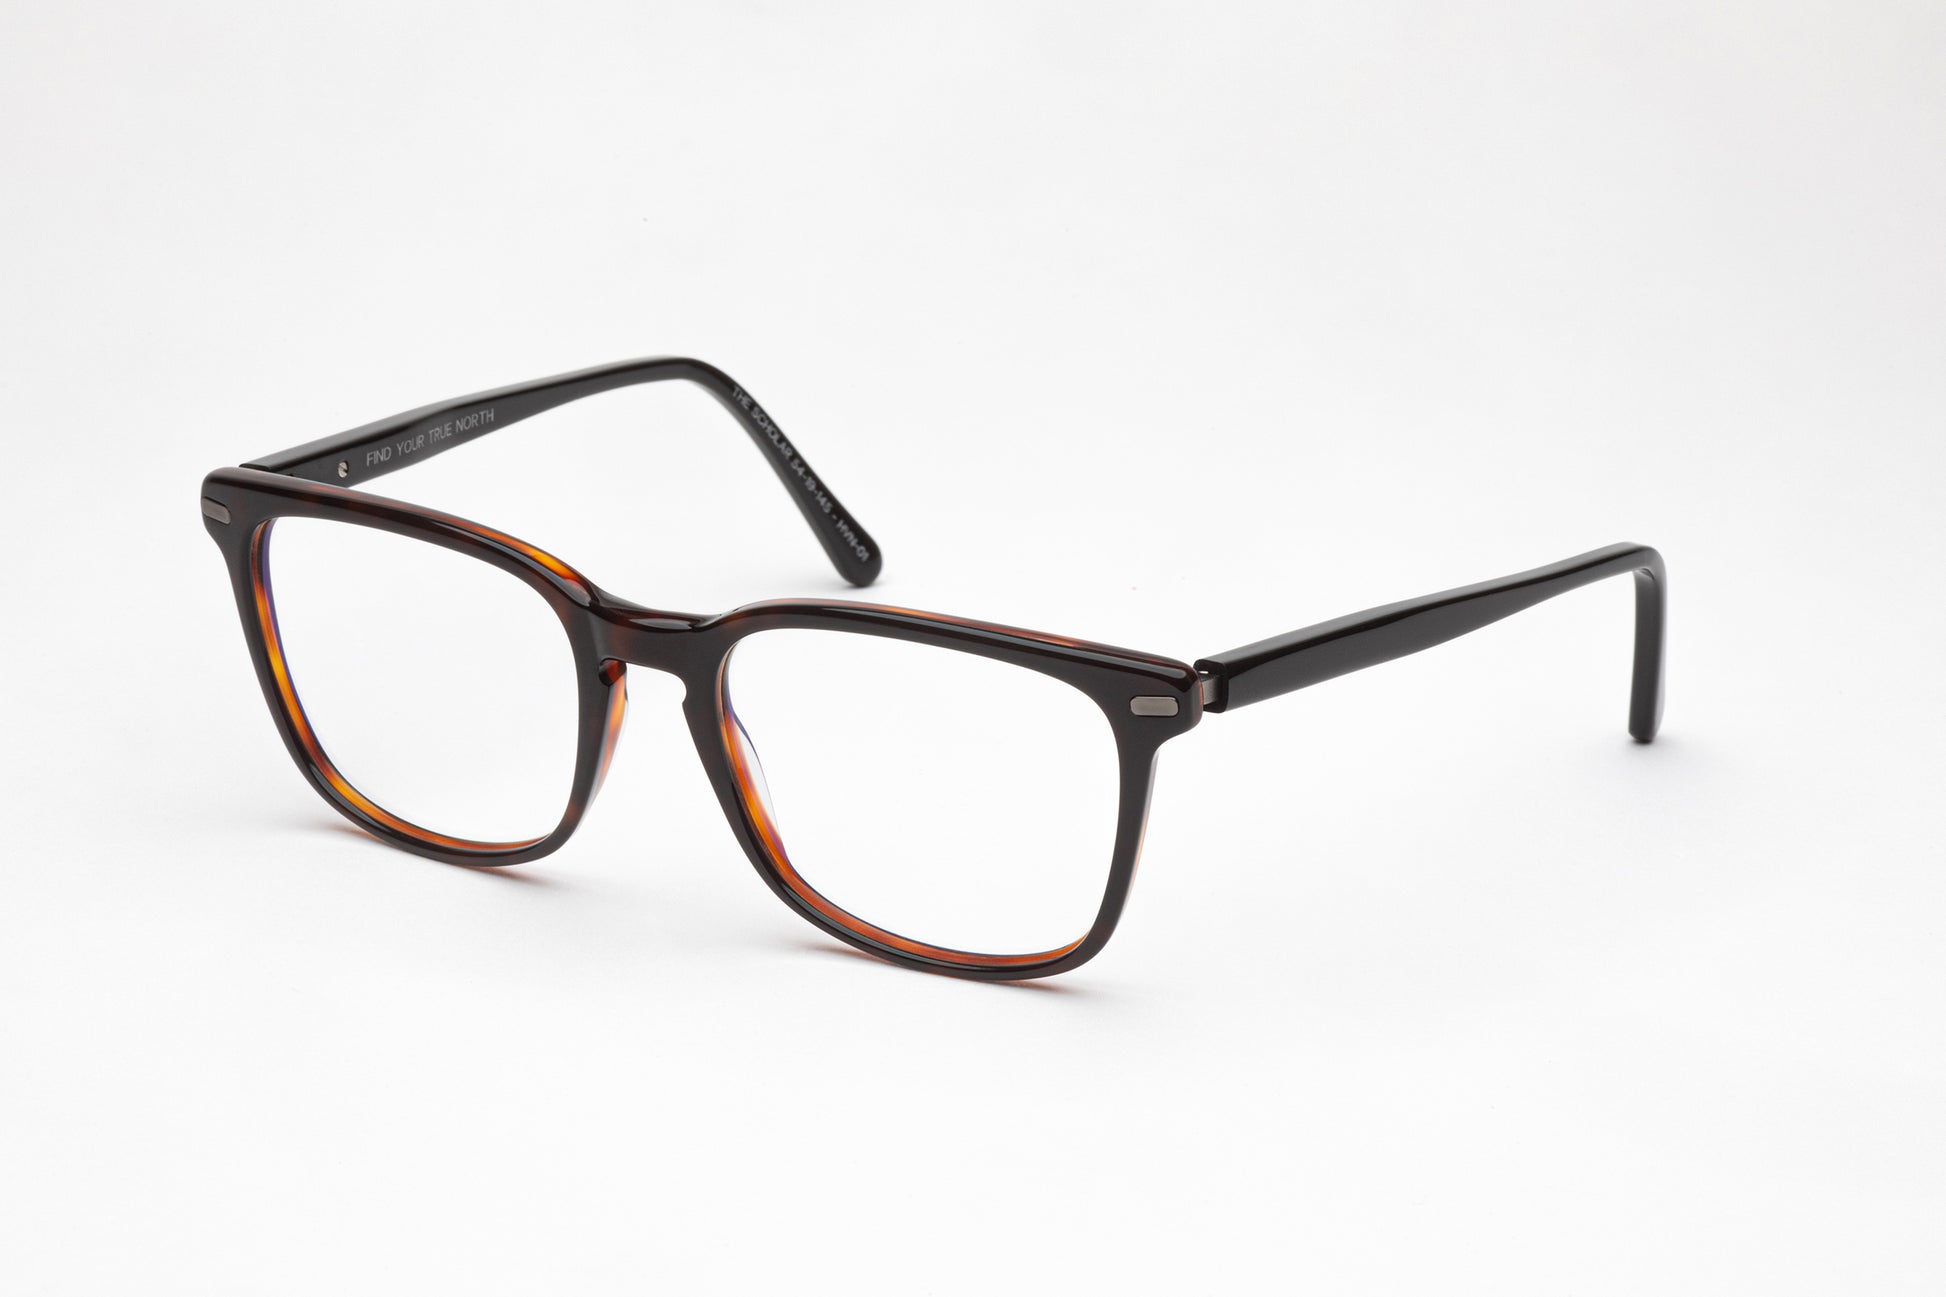 Angled View - The Scholar | Tortoiseshell Acetate Frame – Square Designer Prescription Glasses - Low Nose Bridge